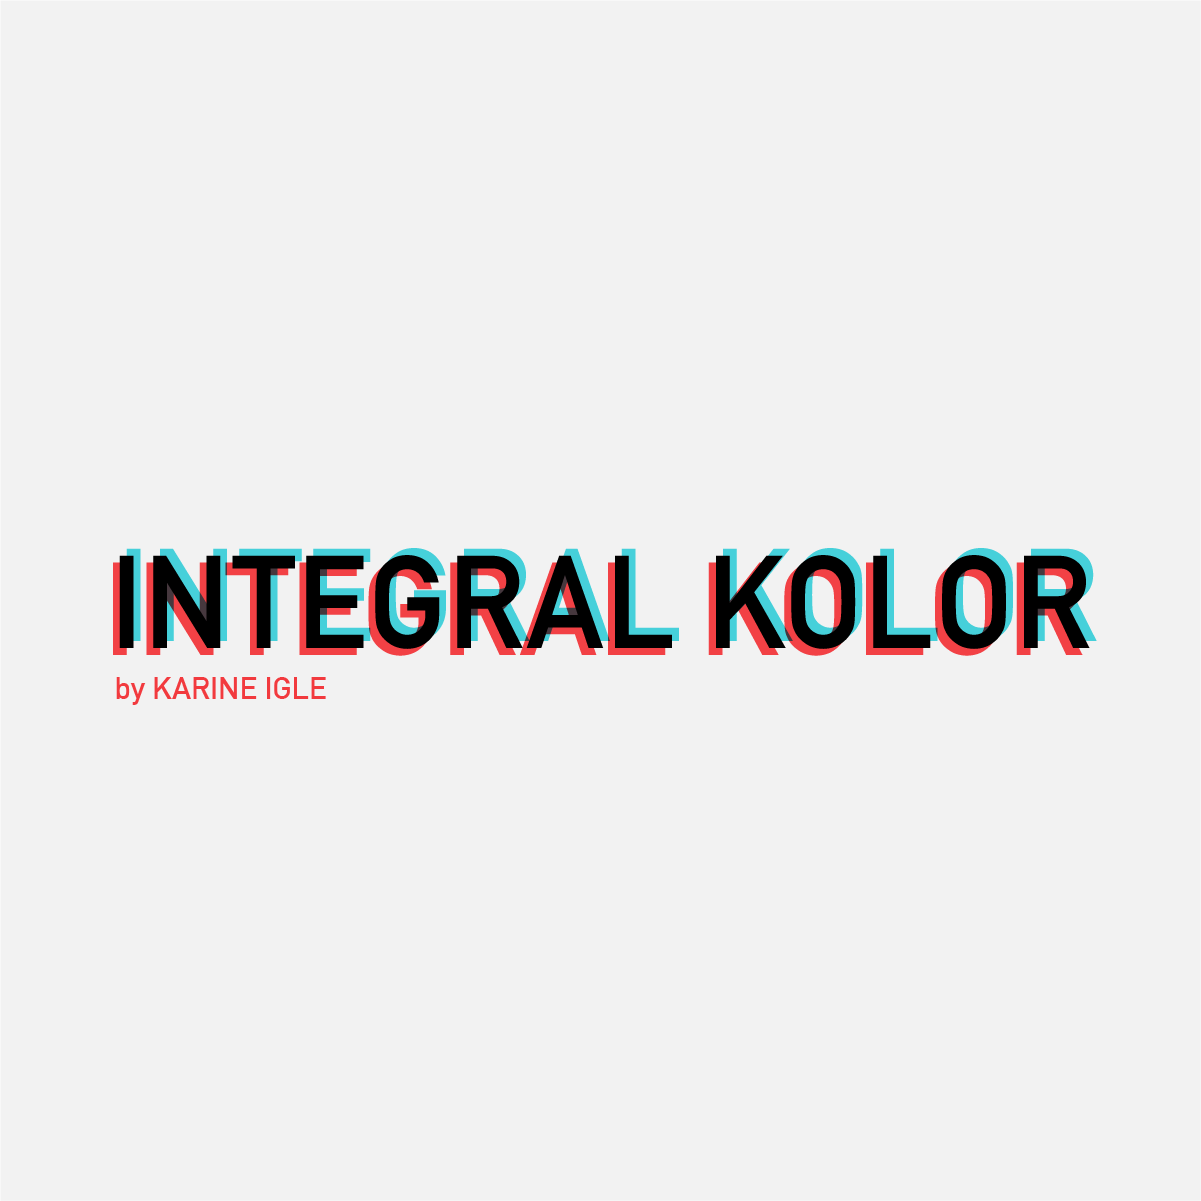 INTEGRAL KOLOR LLC